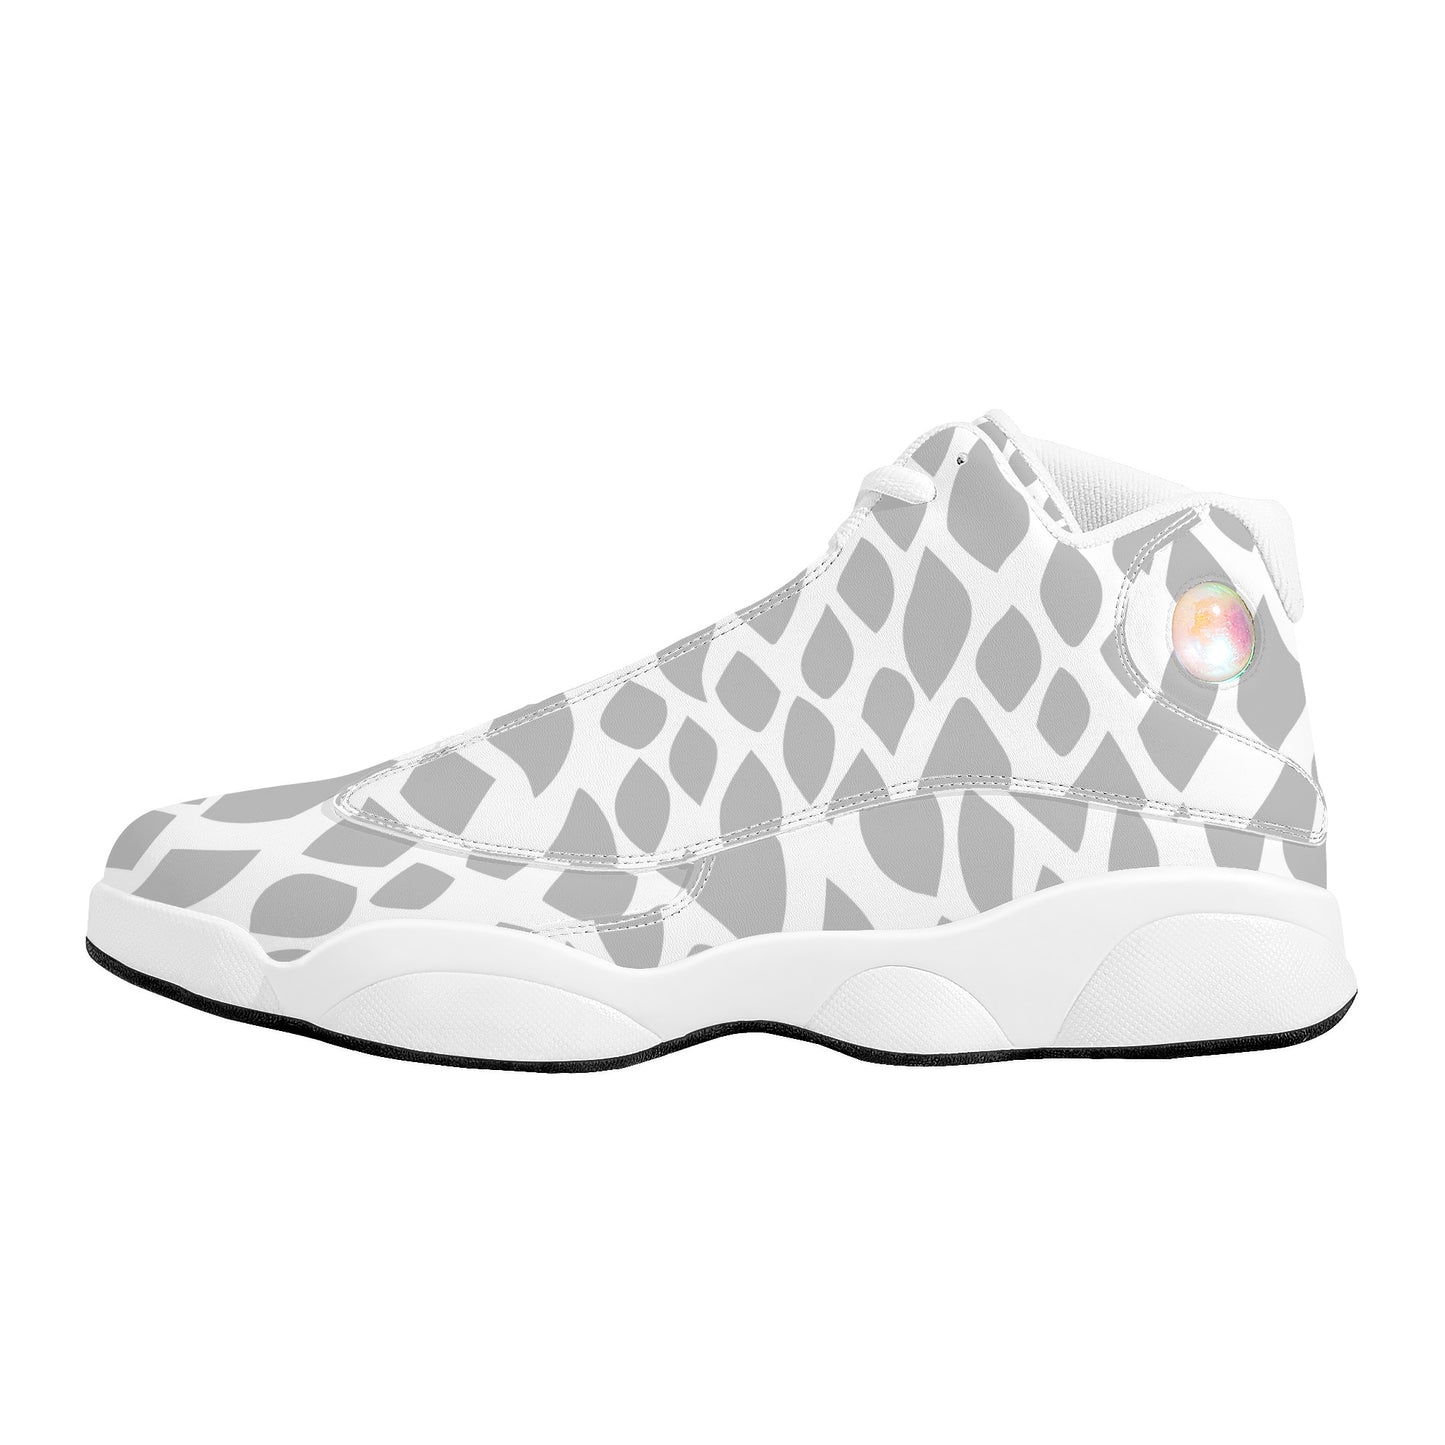 "Nix Snake" Basketball Shoes